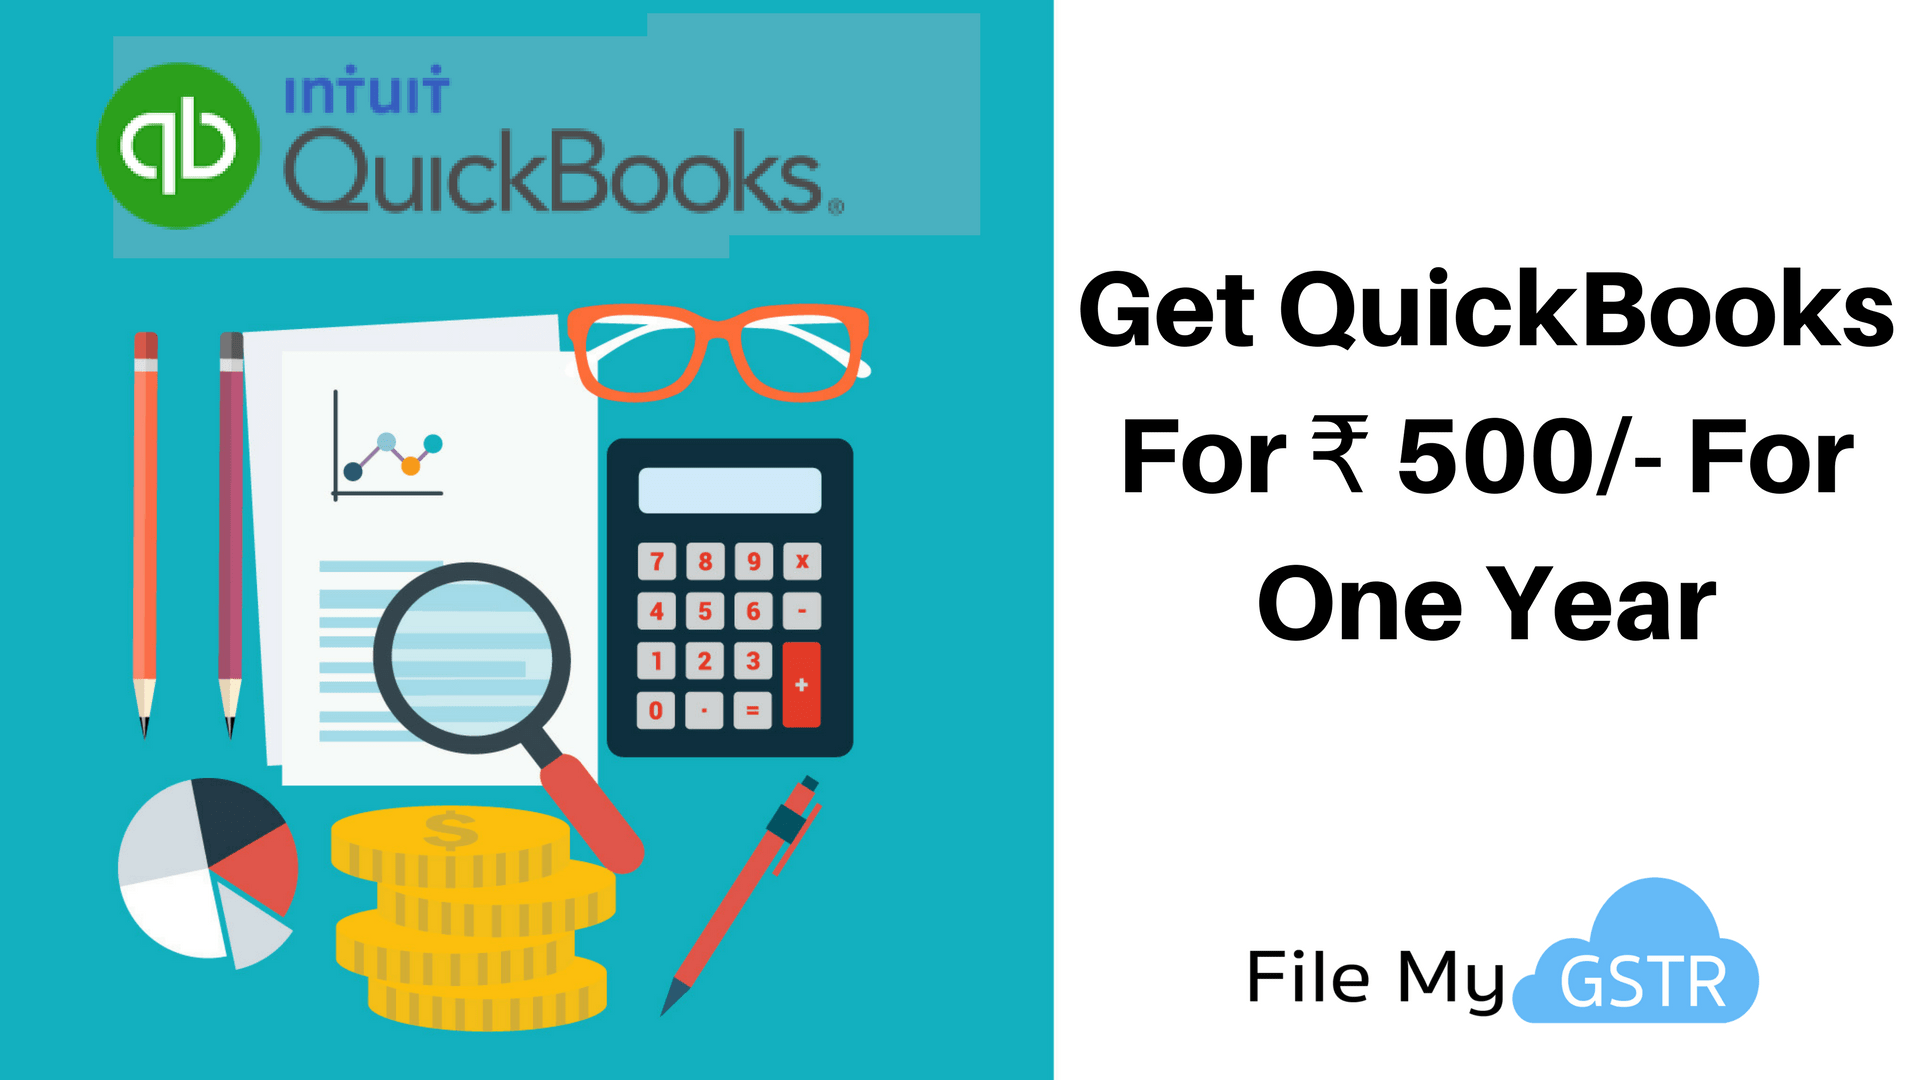 QuickBooks For Business